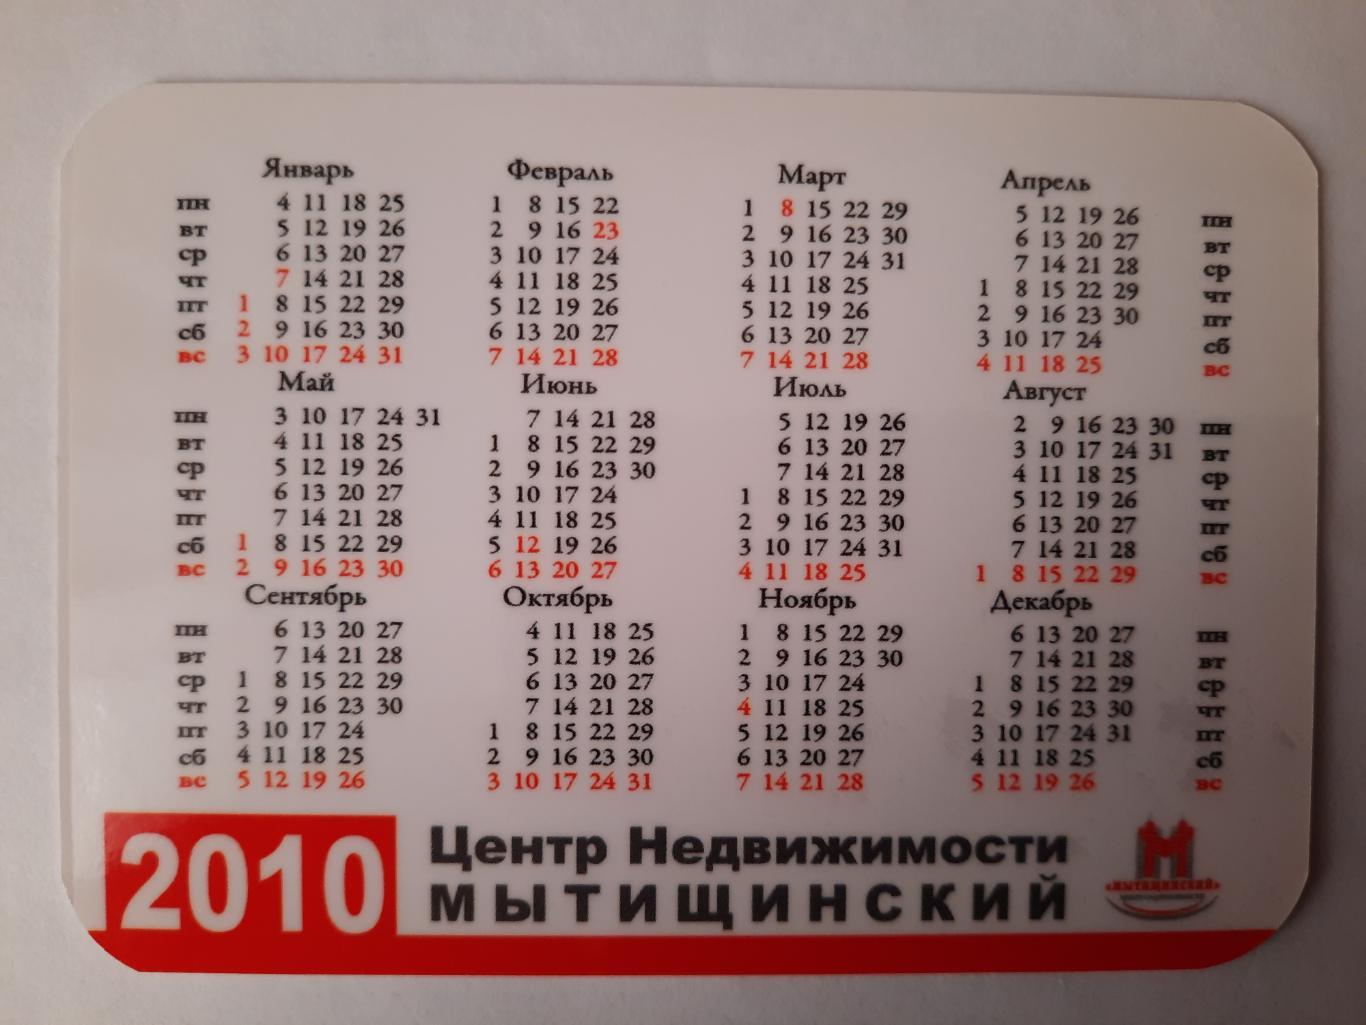 Календарик карманный. Центр недвижимости 2010г. 1